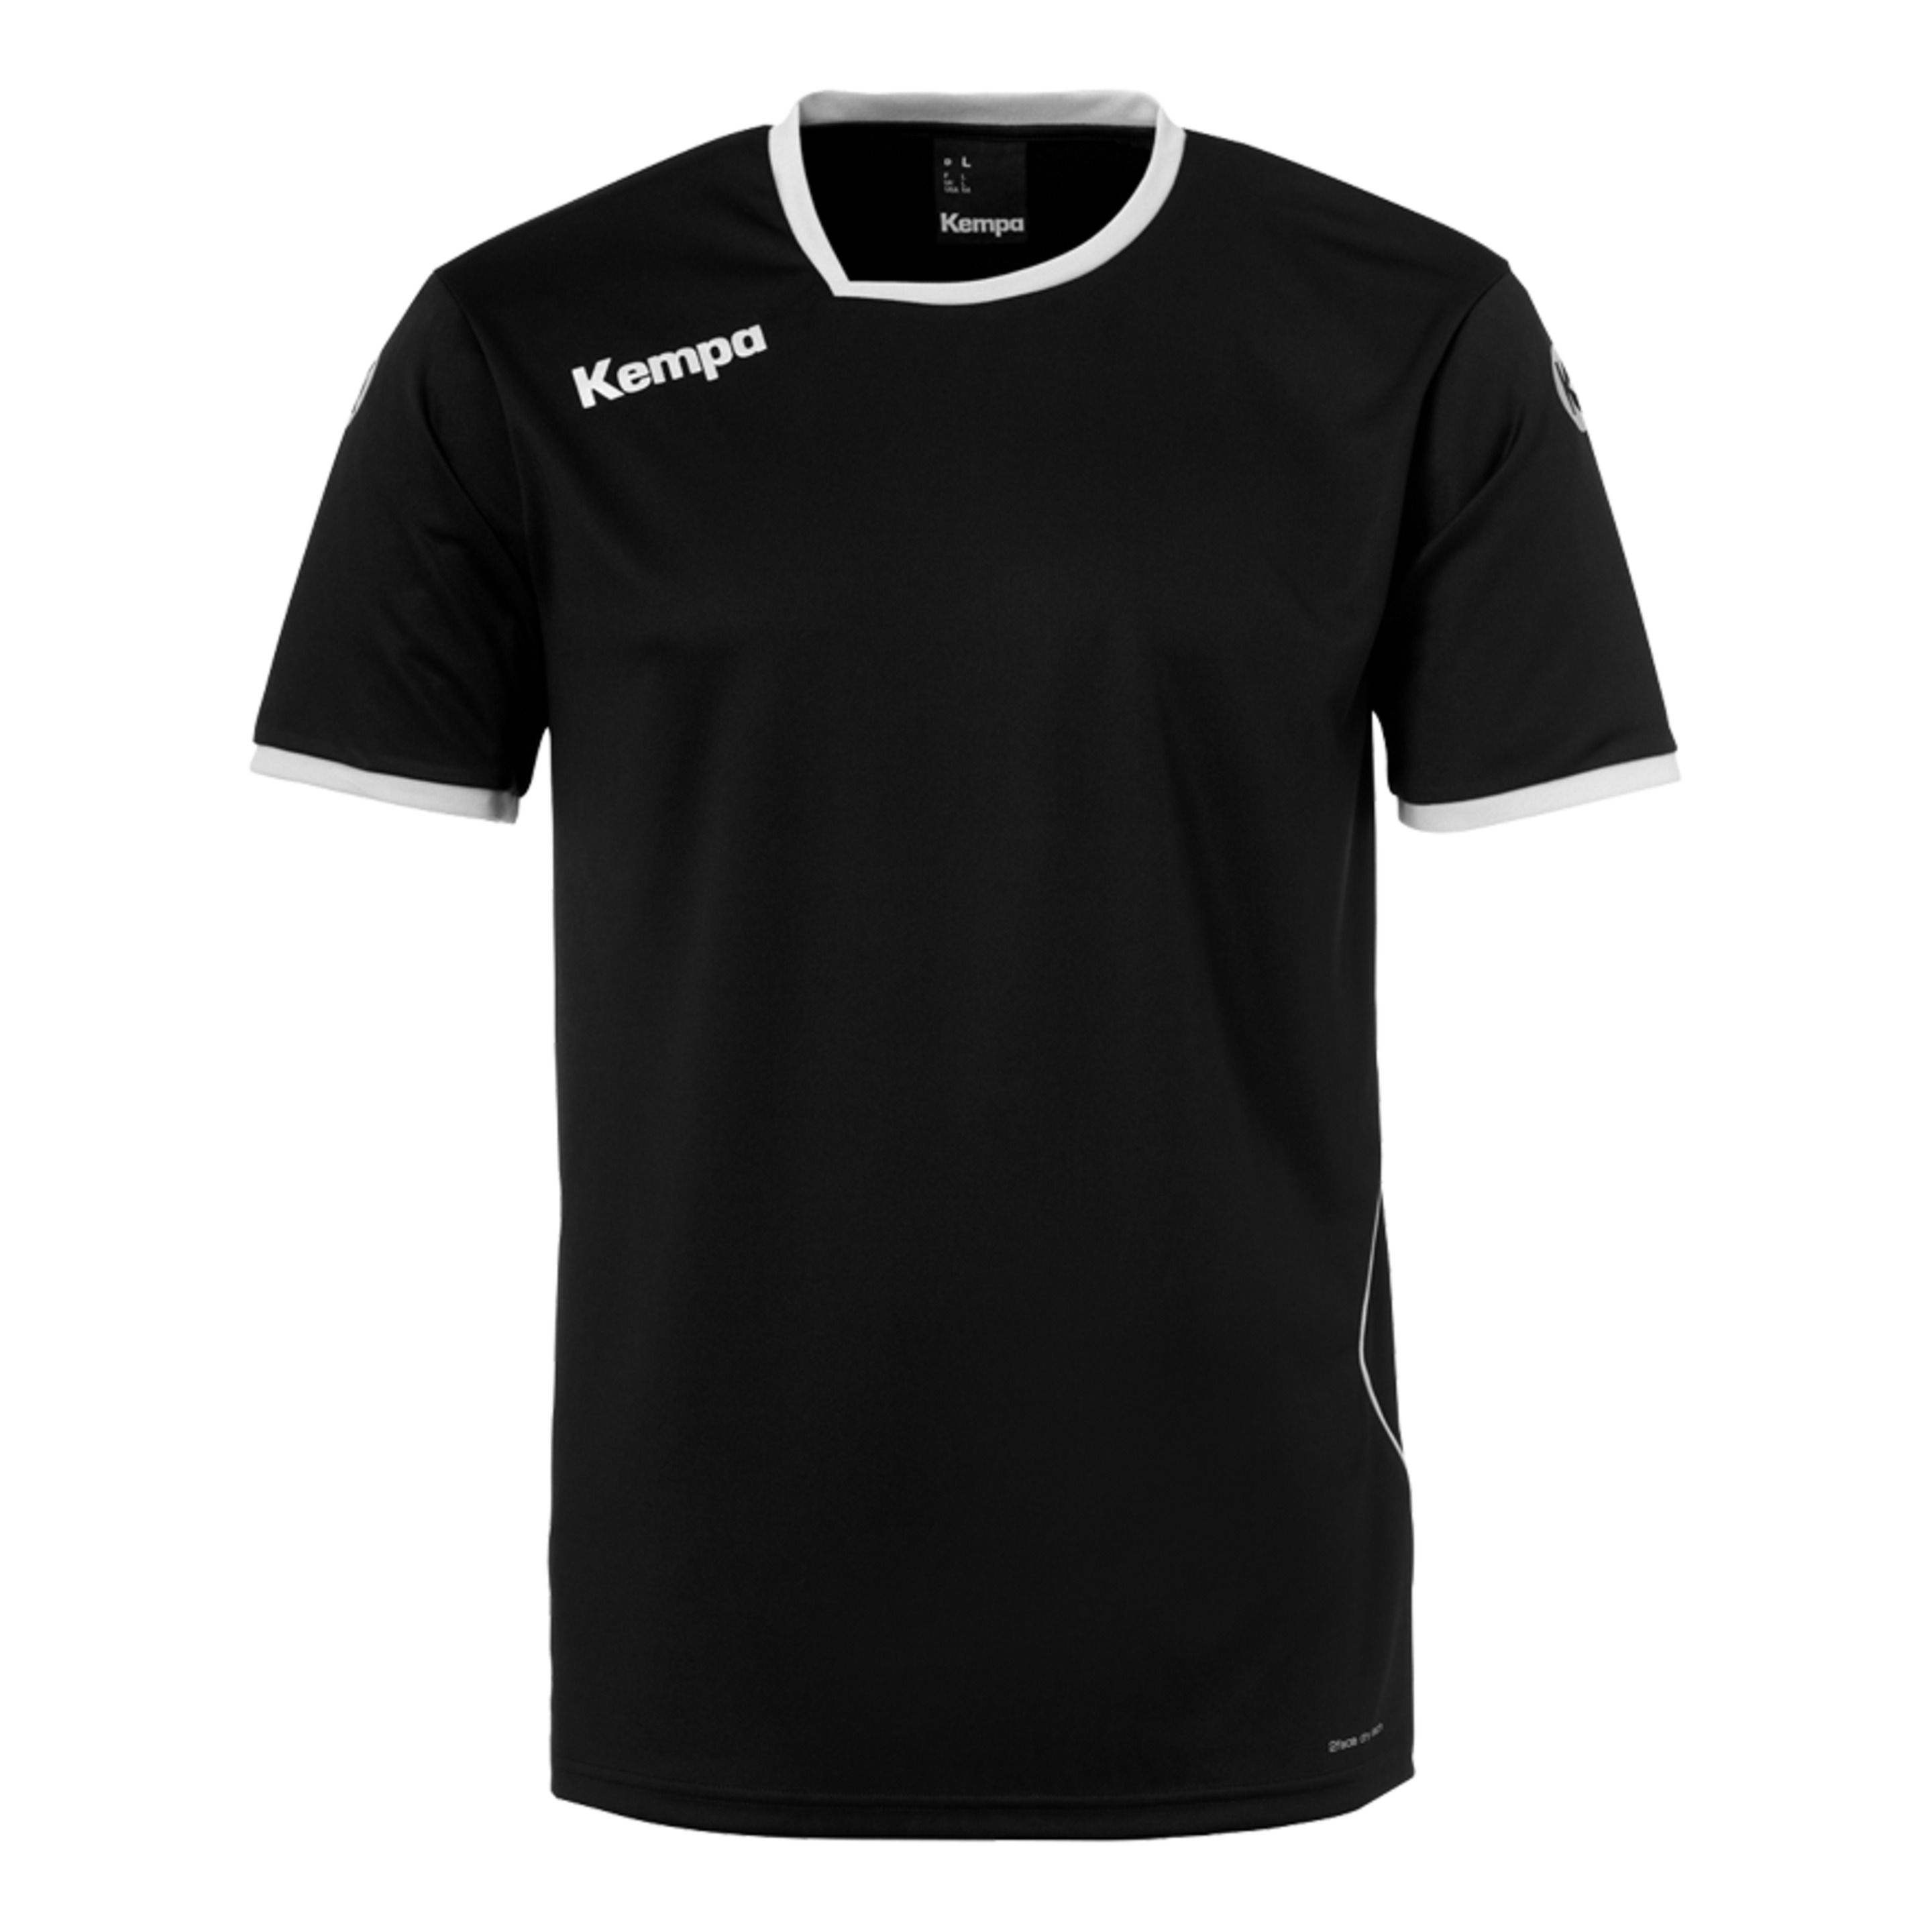 Curve Camiseta Negro/blanco Kempa